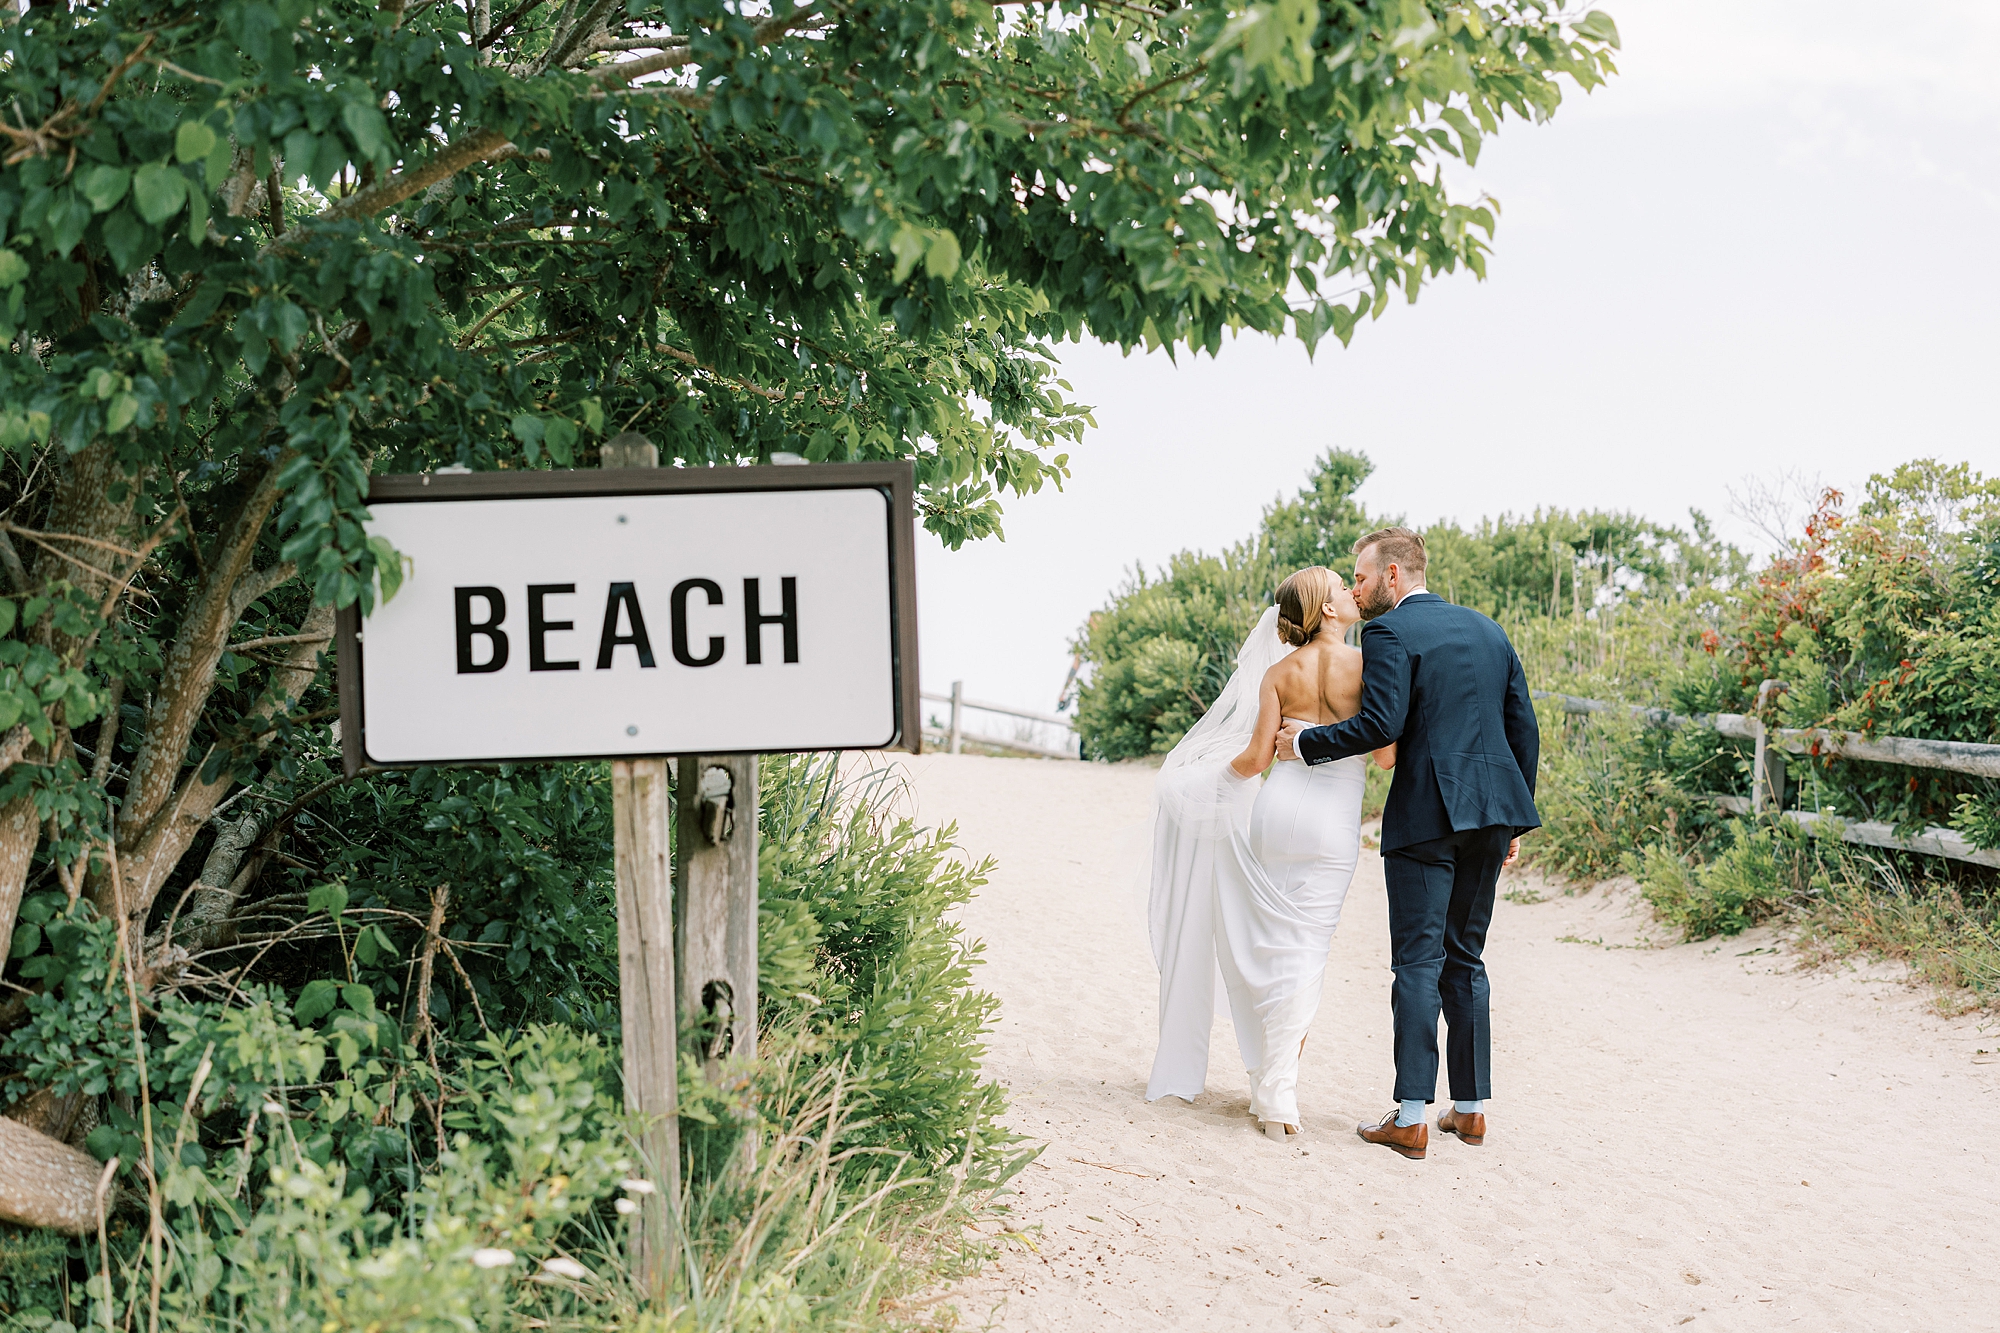 bride and groom hug near beach sign by Cape May lighthouse